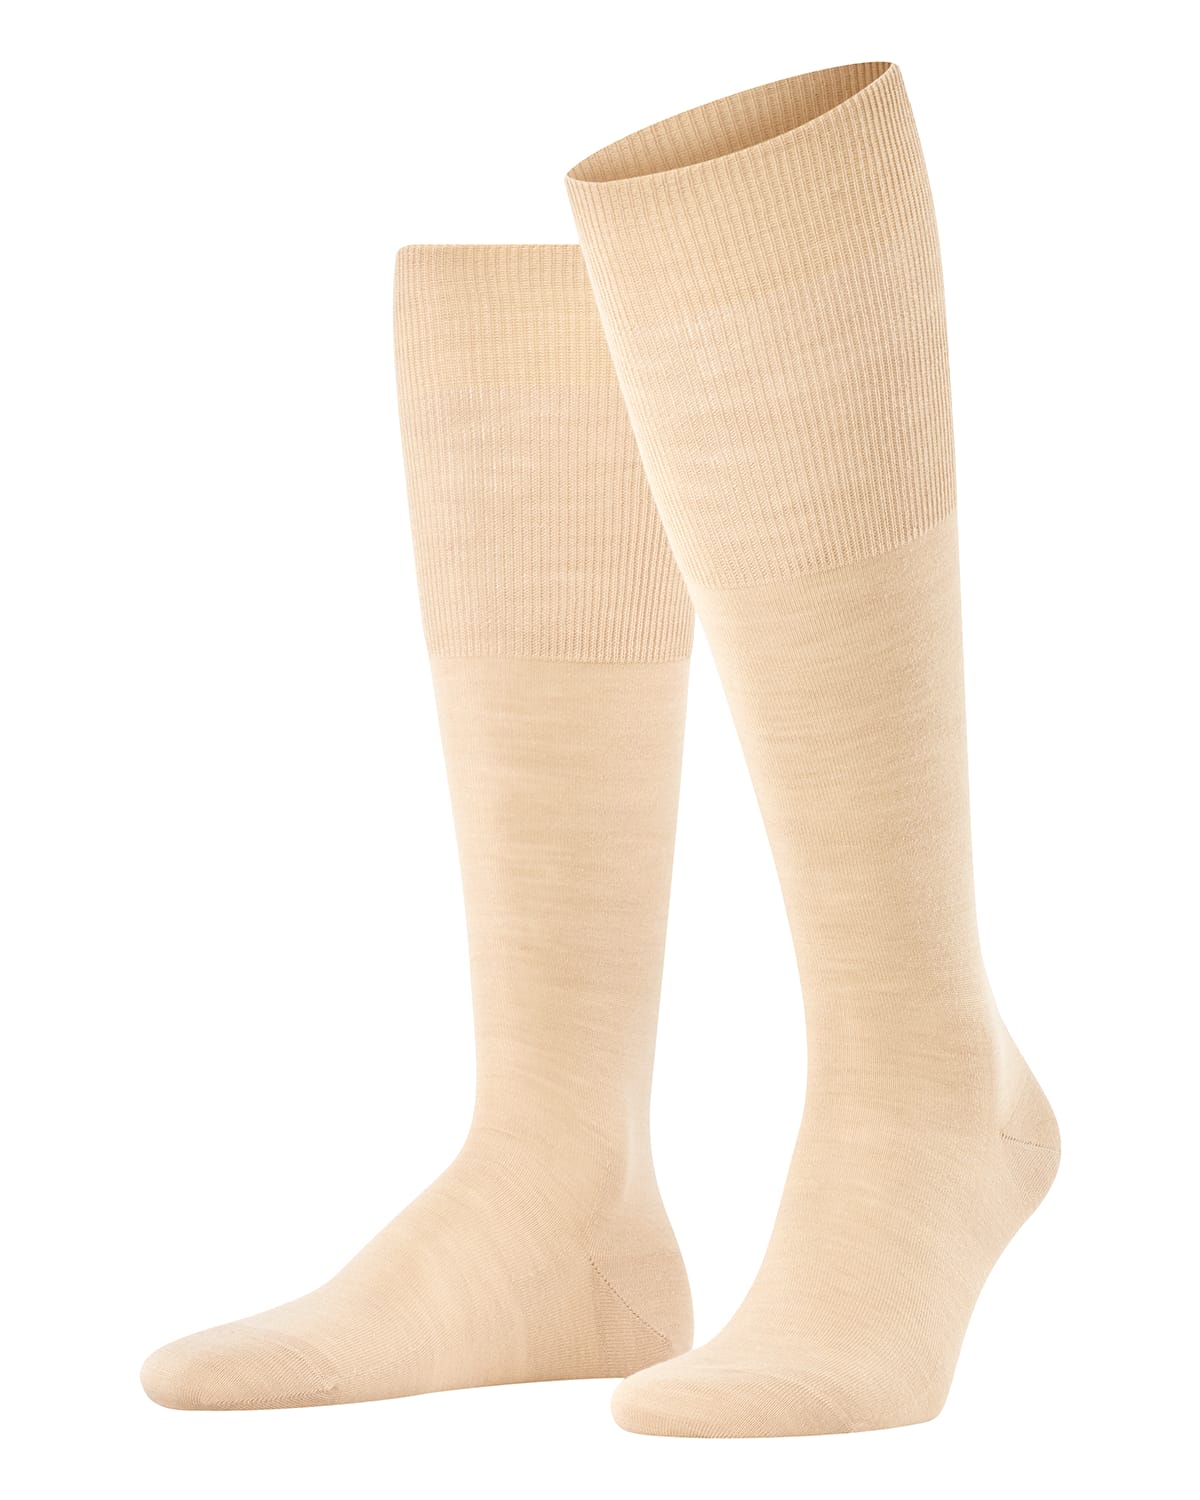 Falke Men's Airport Wool Knee-high Socks In Sand